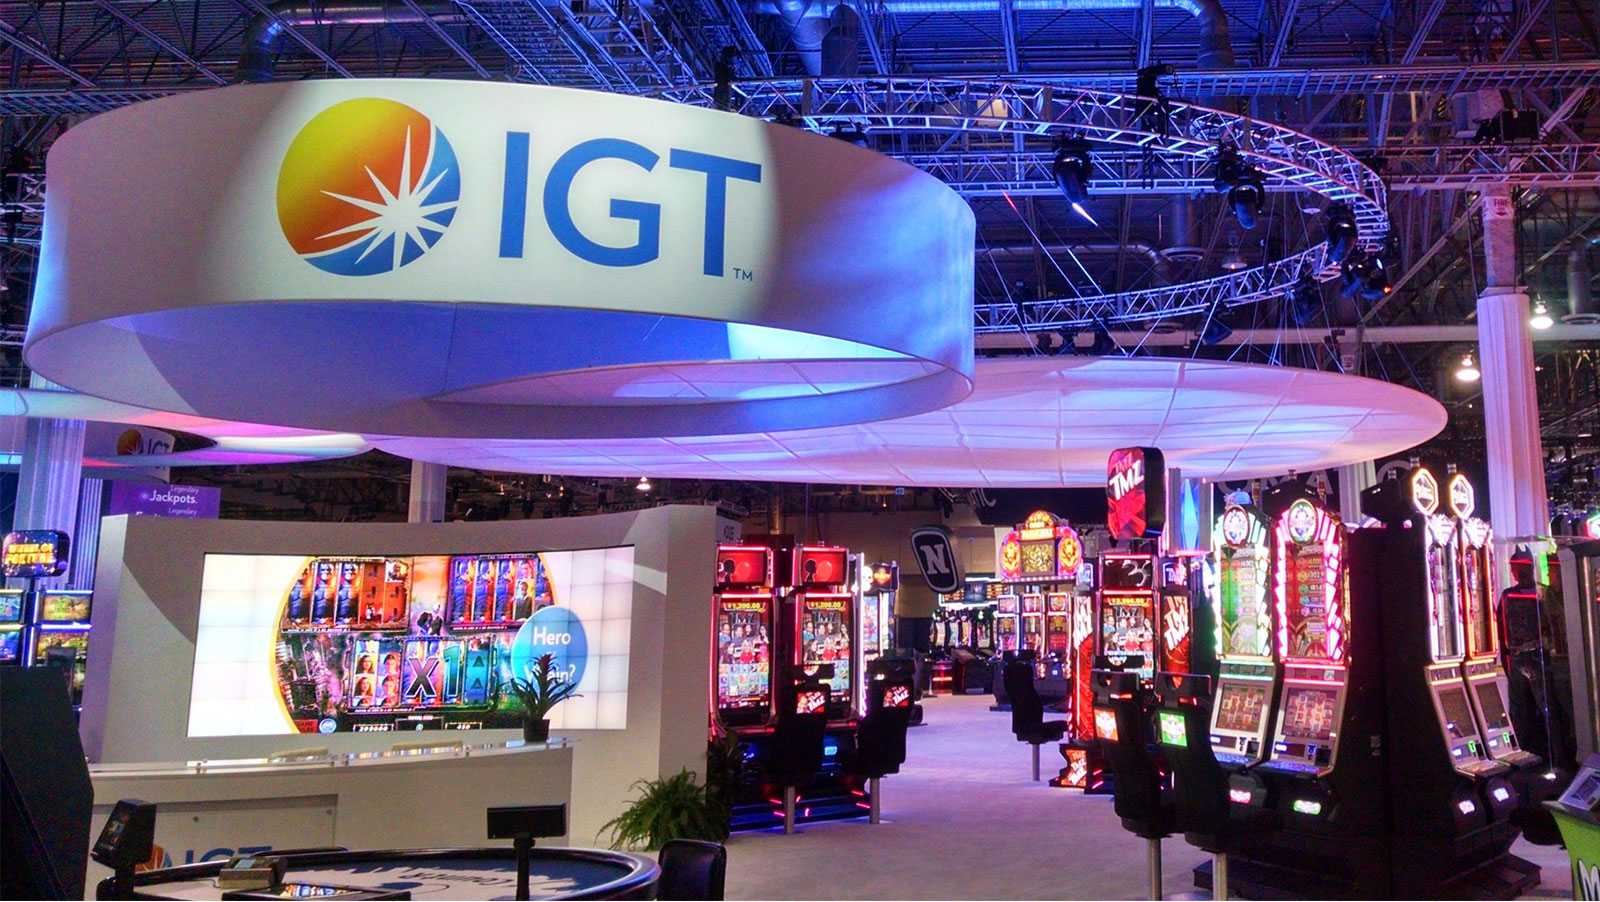 IGT's slot machines gaining favor with casinos, says Deutsche Bank